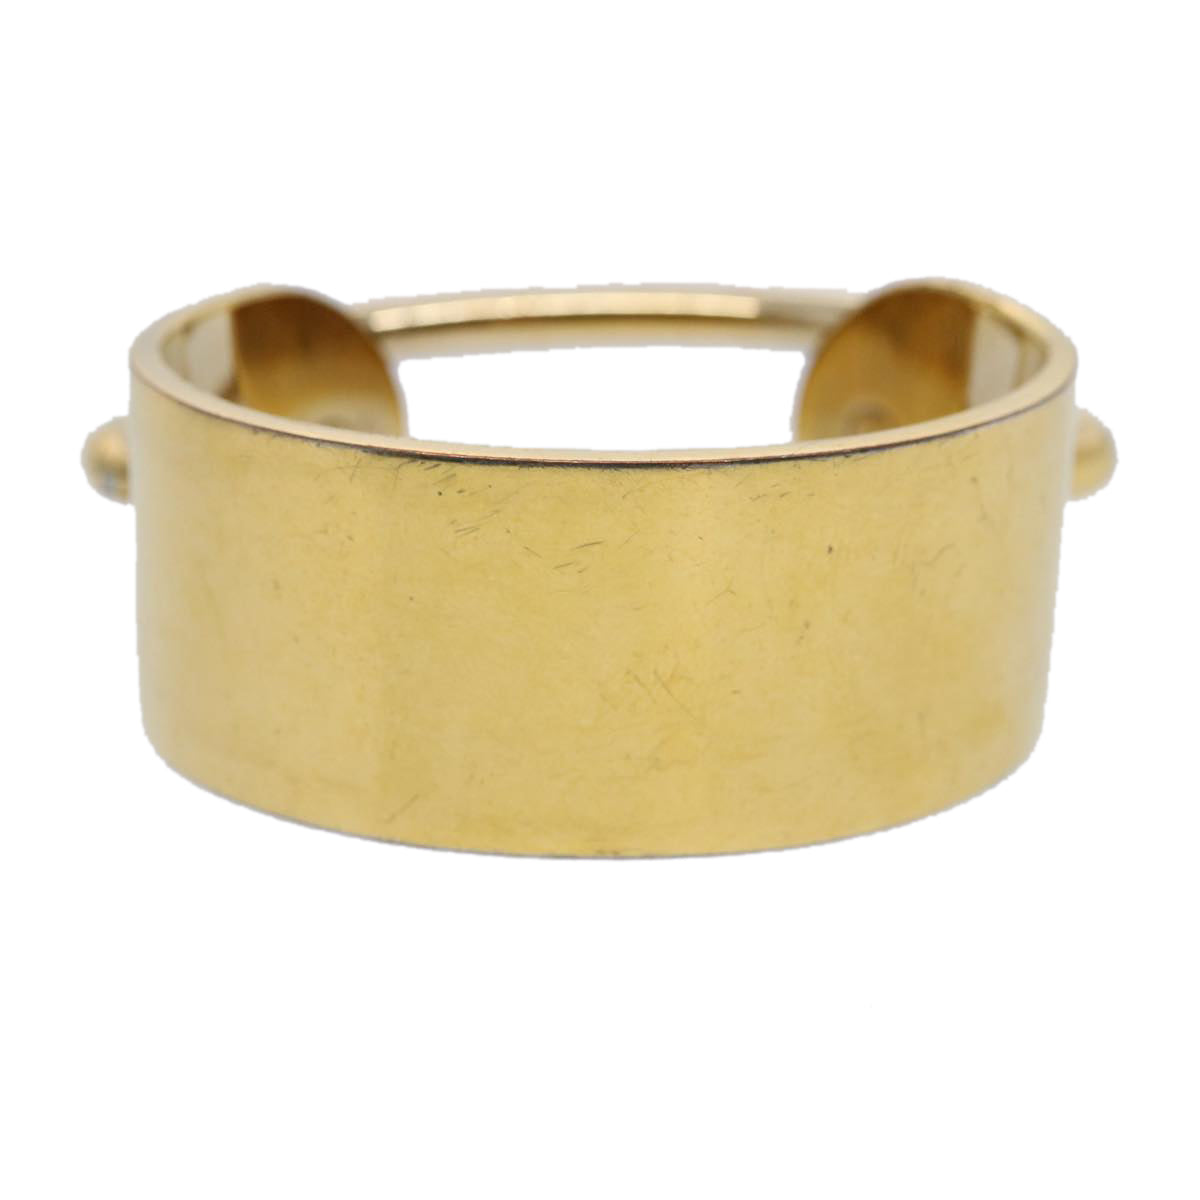 BALENCIAGA Bracelet S Size Gold Tone Auth hk963